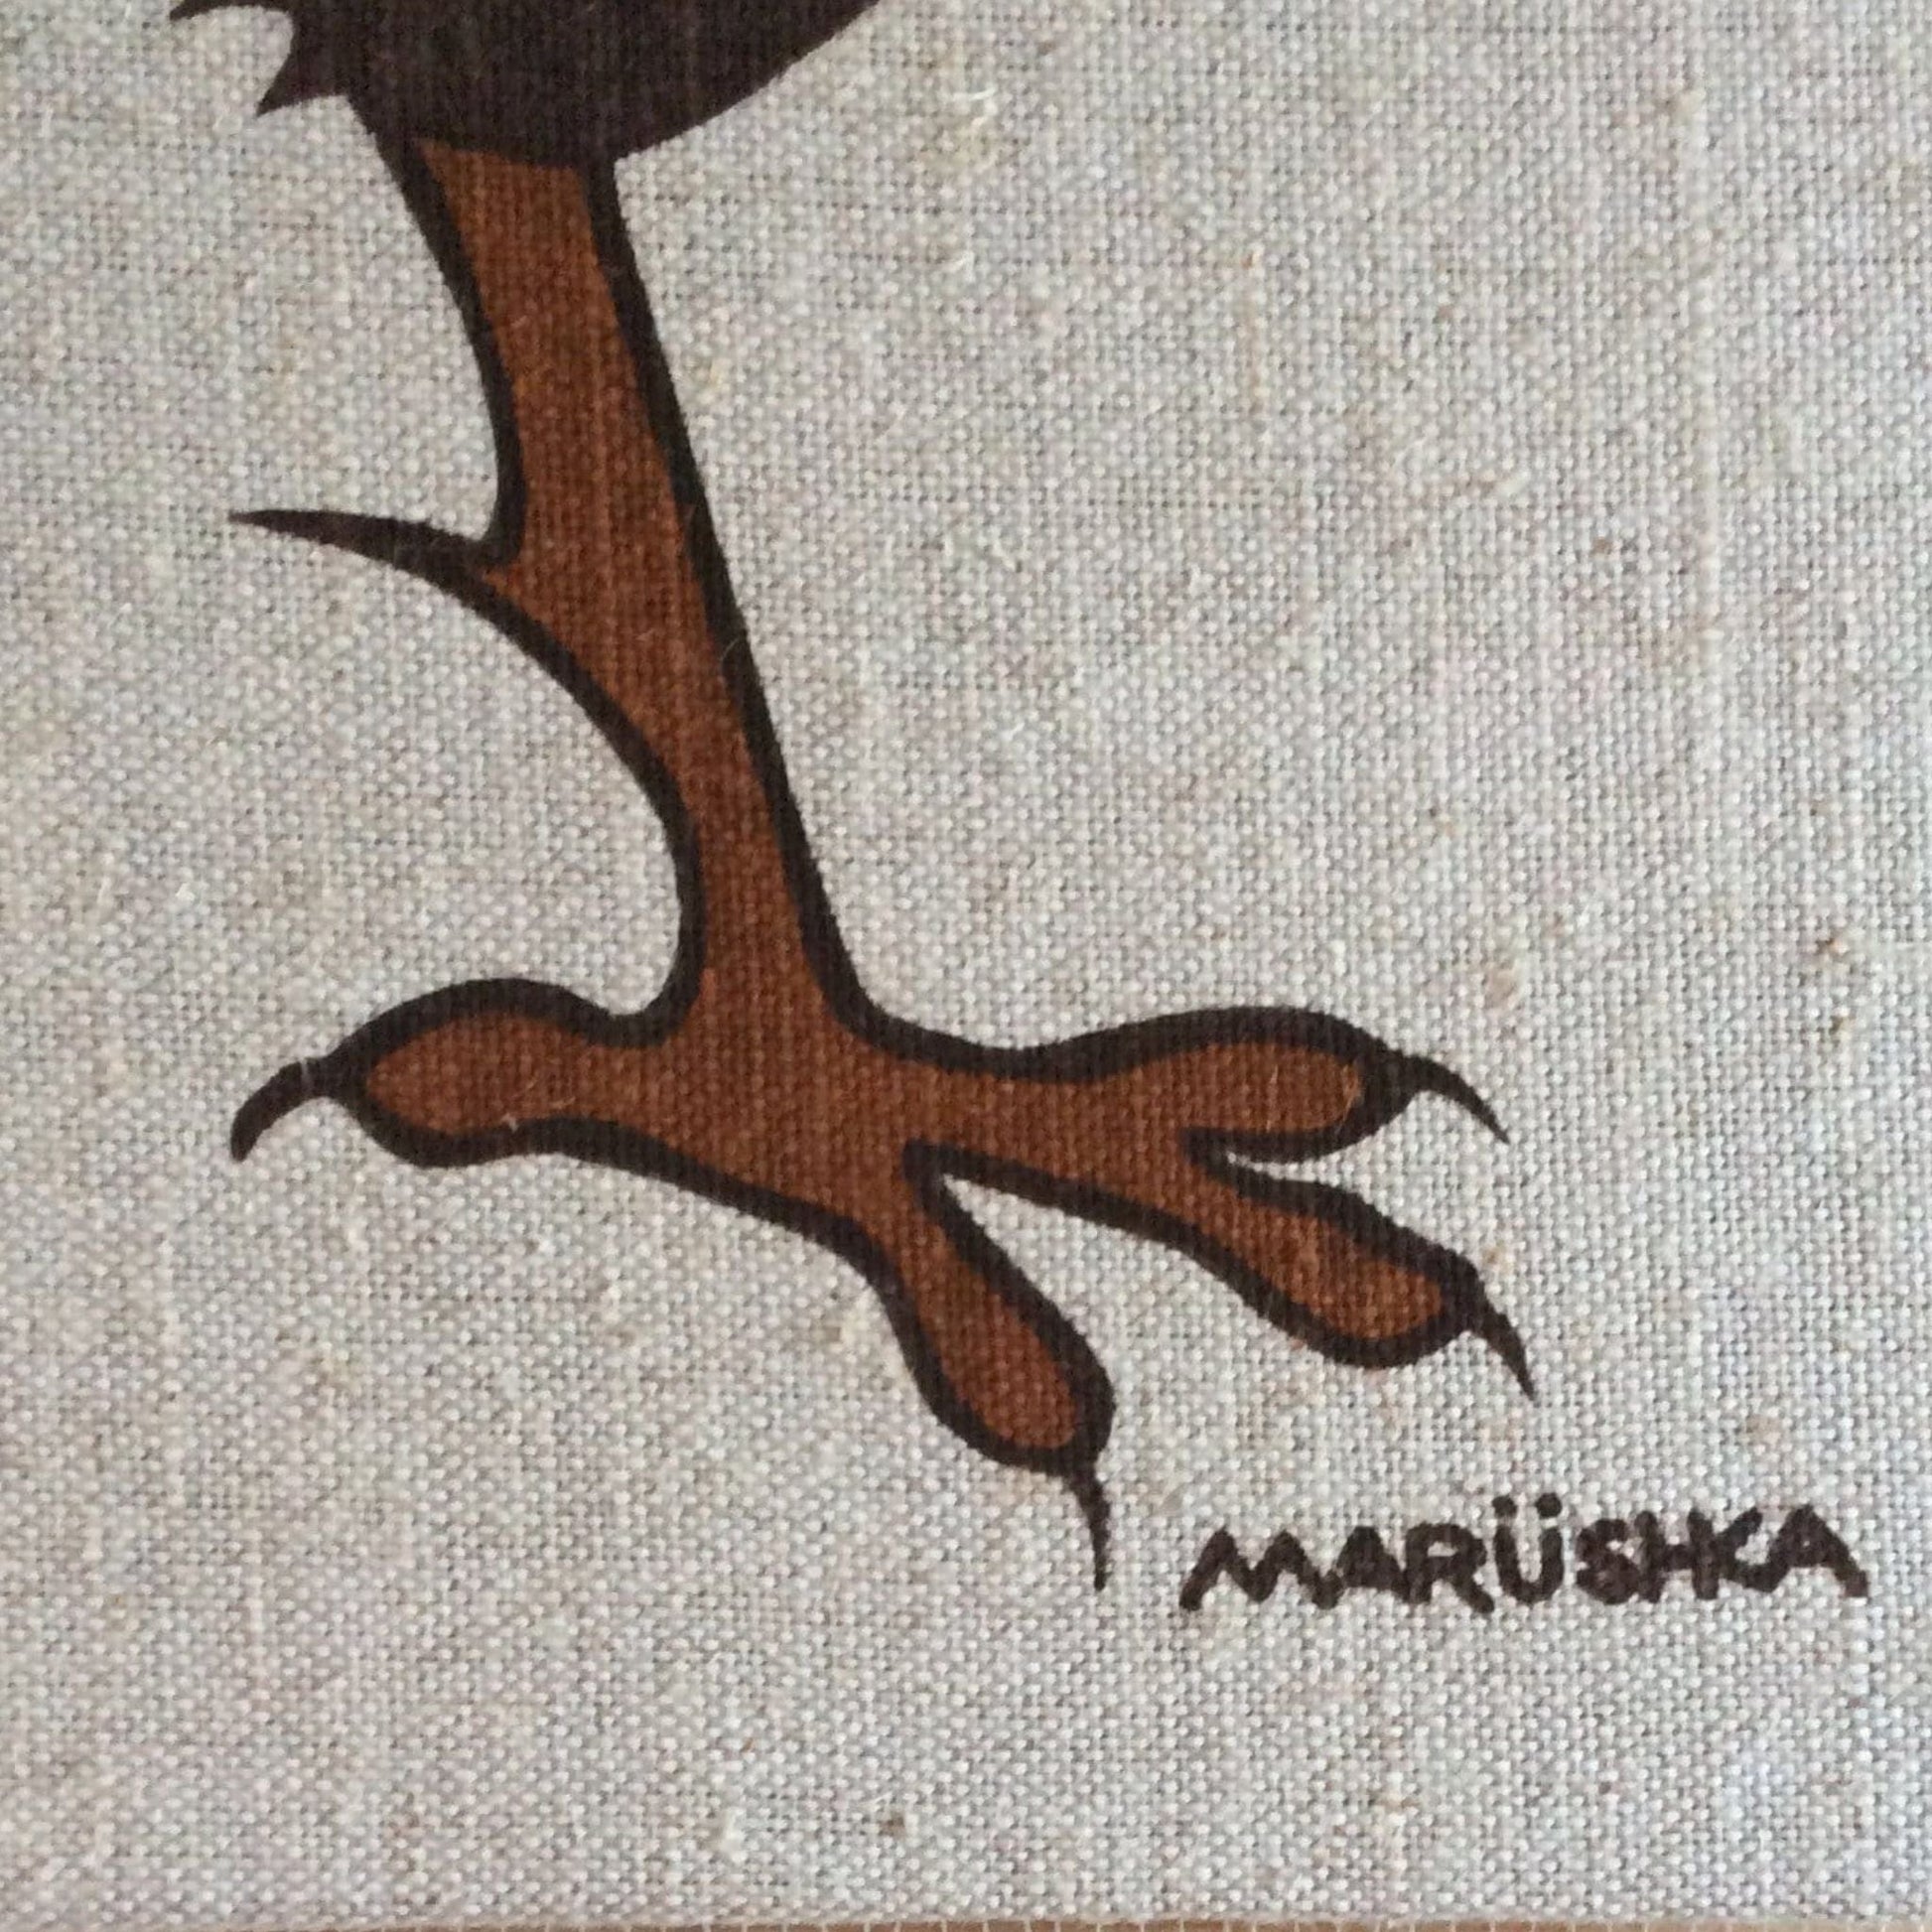 Marushka Pheasant Wall Decor Multi / Mixed / Vintage 1970s